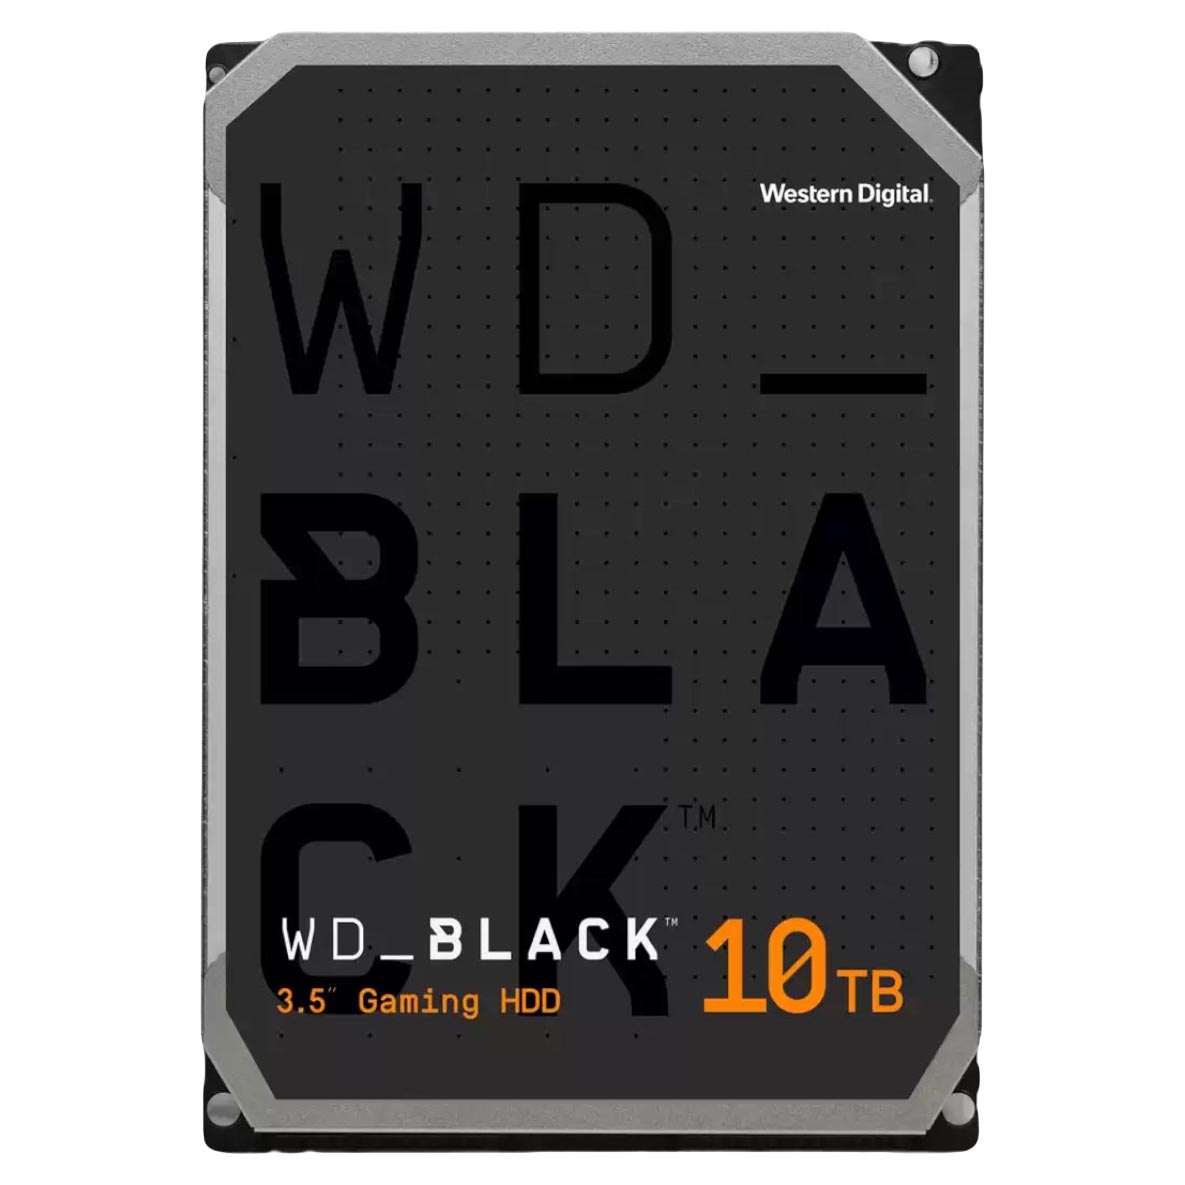 Внутренний жесткий диск Western Digital WD Black Gaming, WD101FZBX, 10 Тб жесткий диск western digital wd gold 6 тб 3 5 wd6003fryz